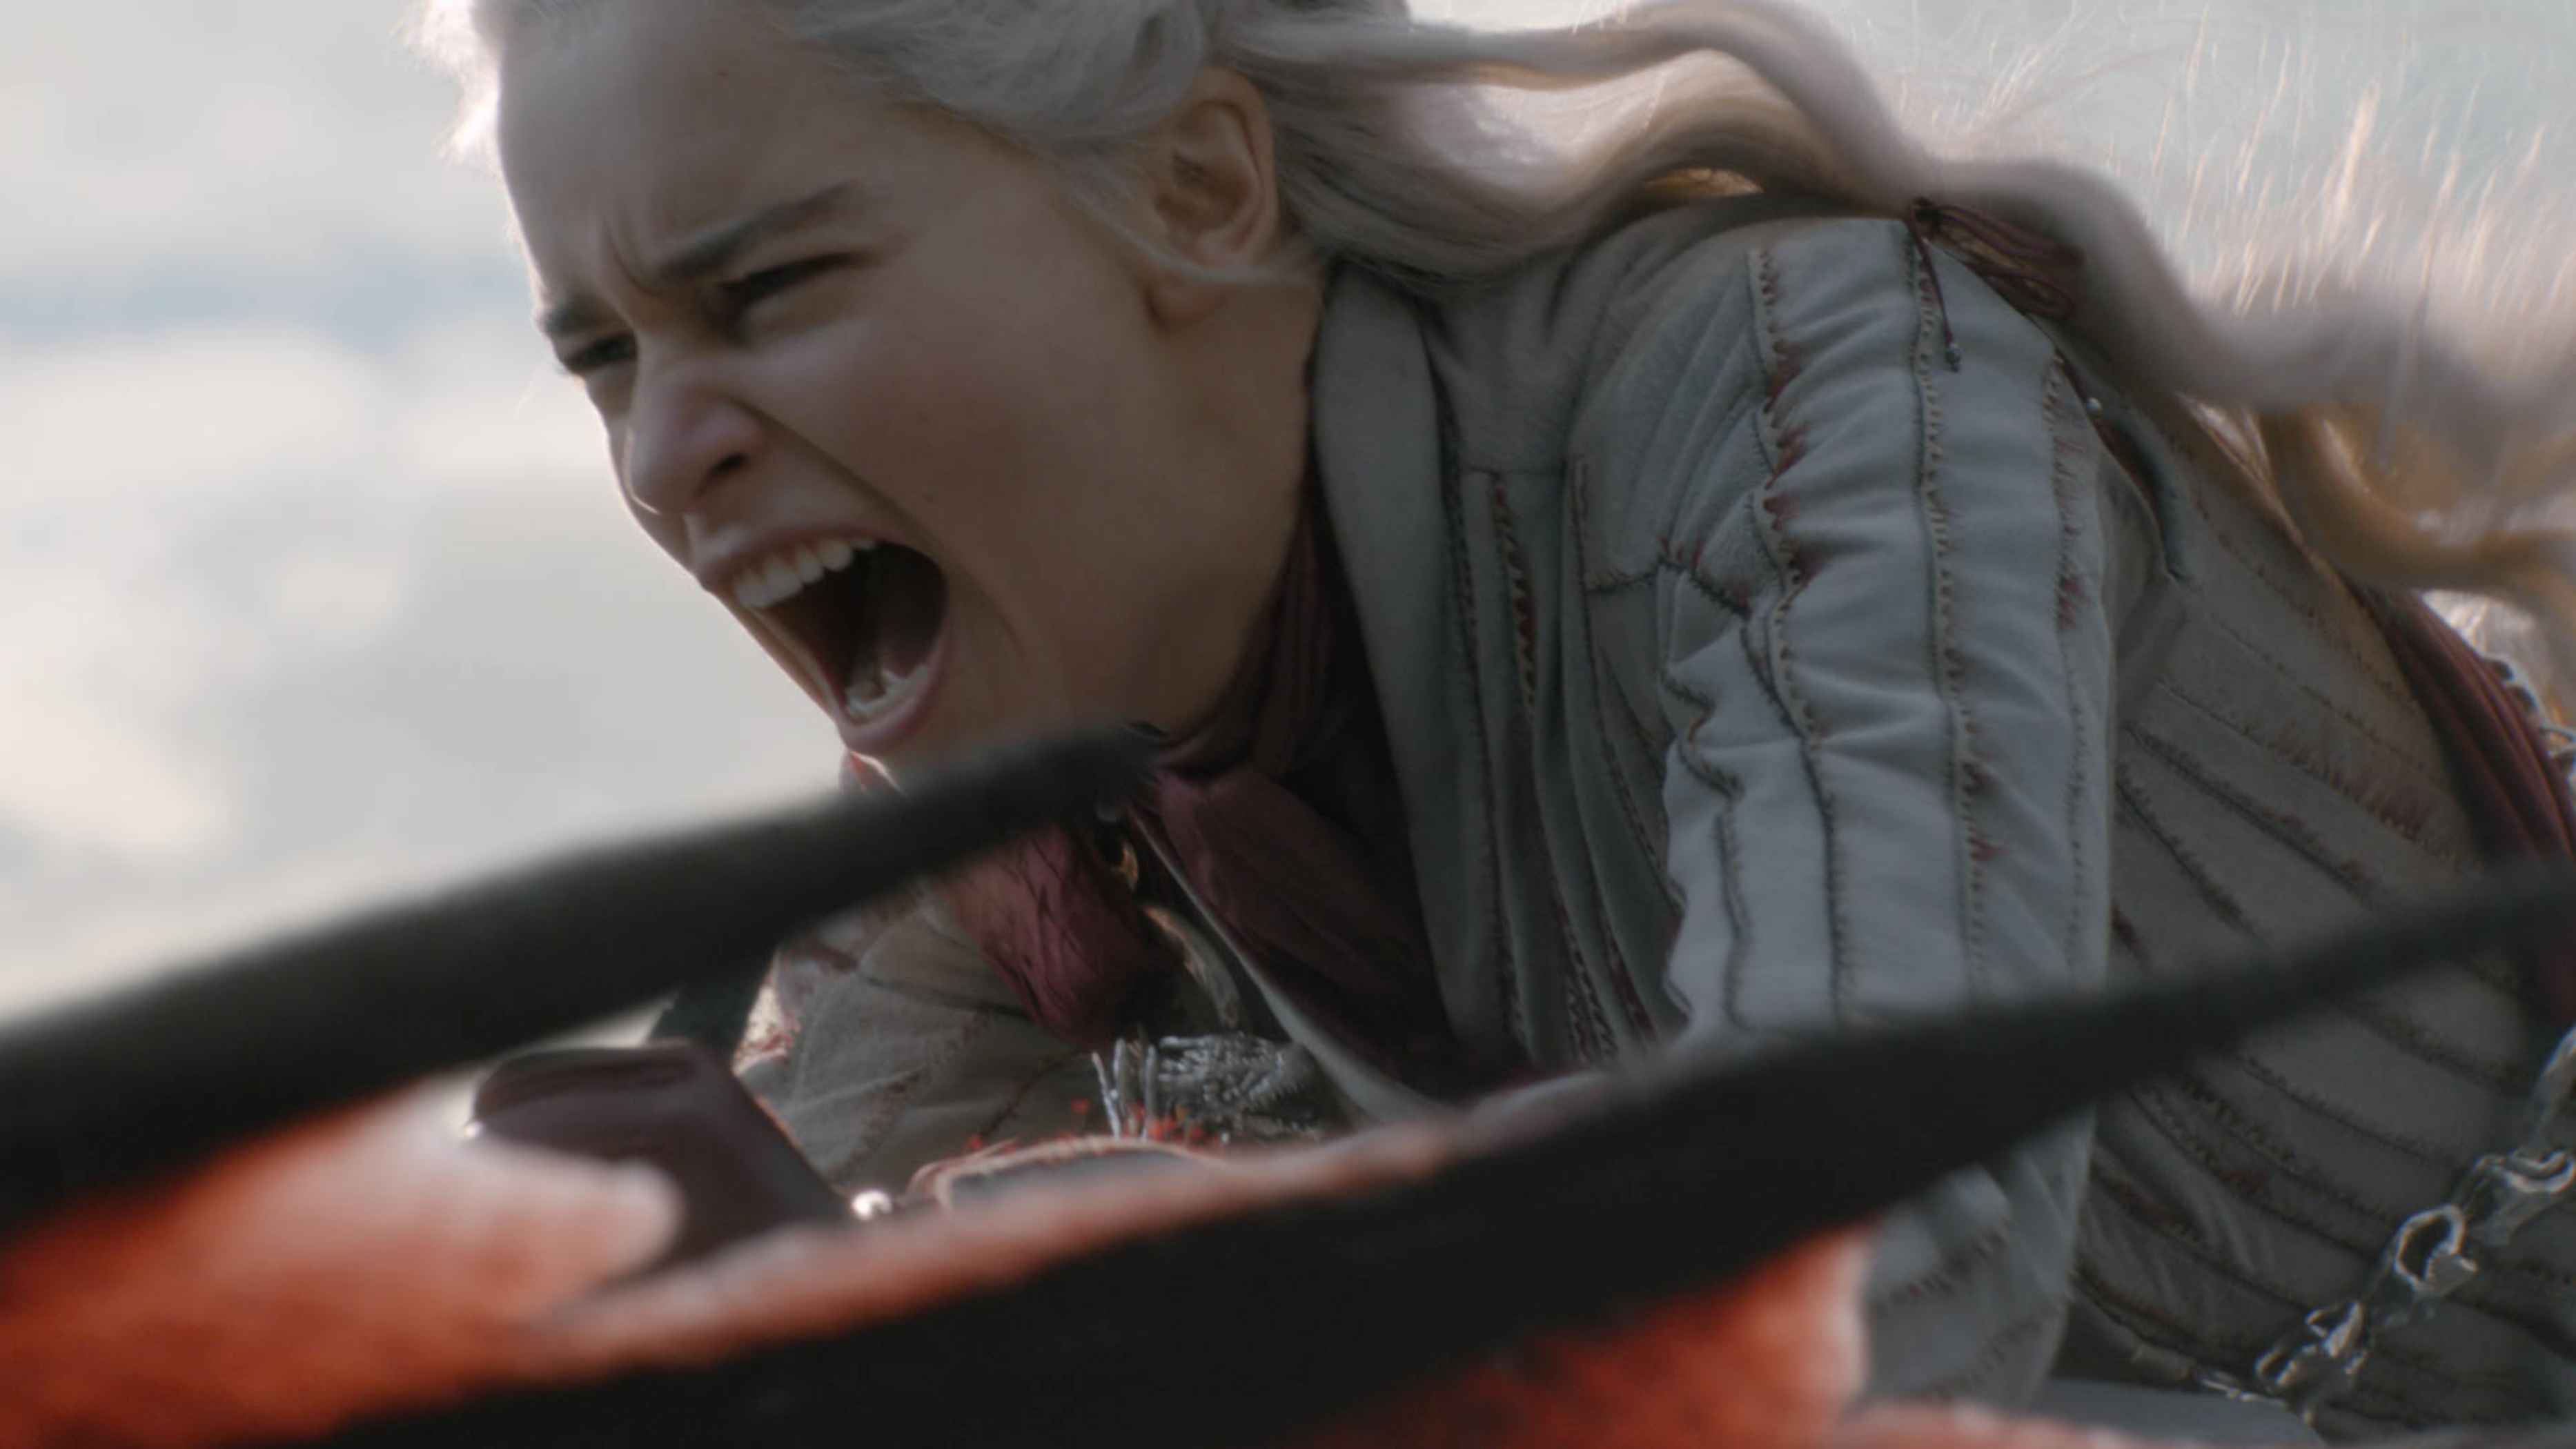 Daenerys Targaryen (Emilia Clarke) rides one of her dragons. Courtesy of HBO | Photo by Helen Sloan